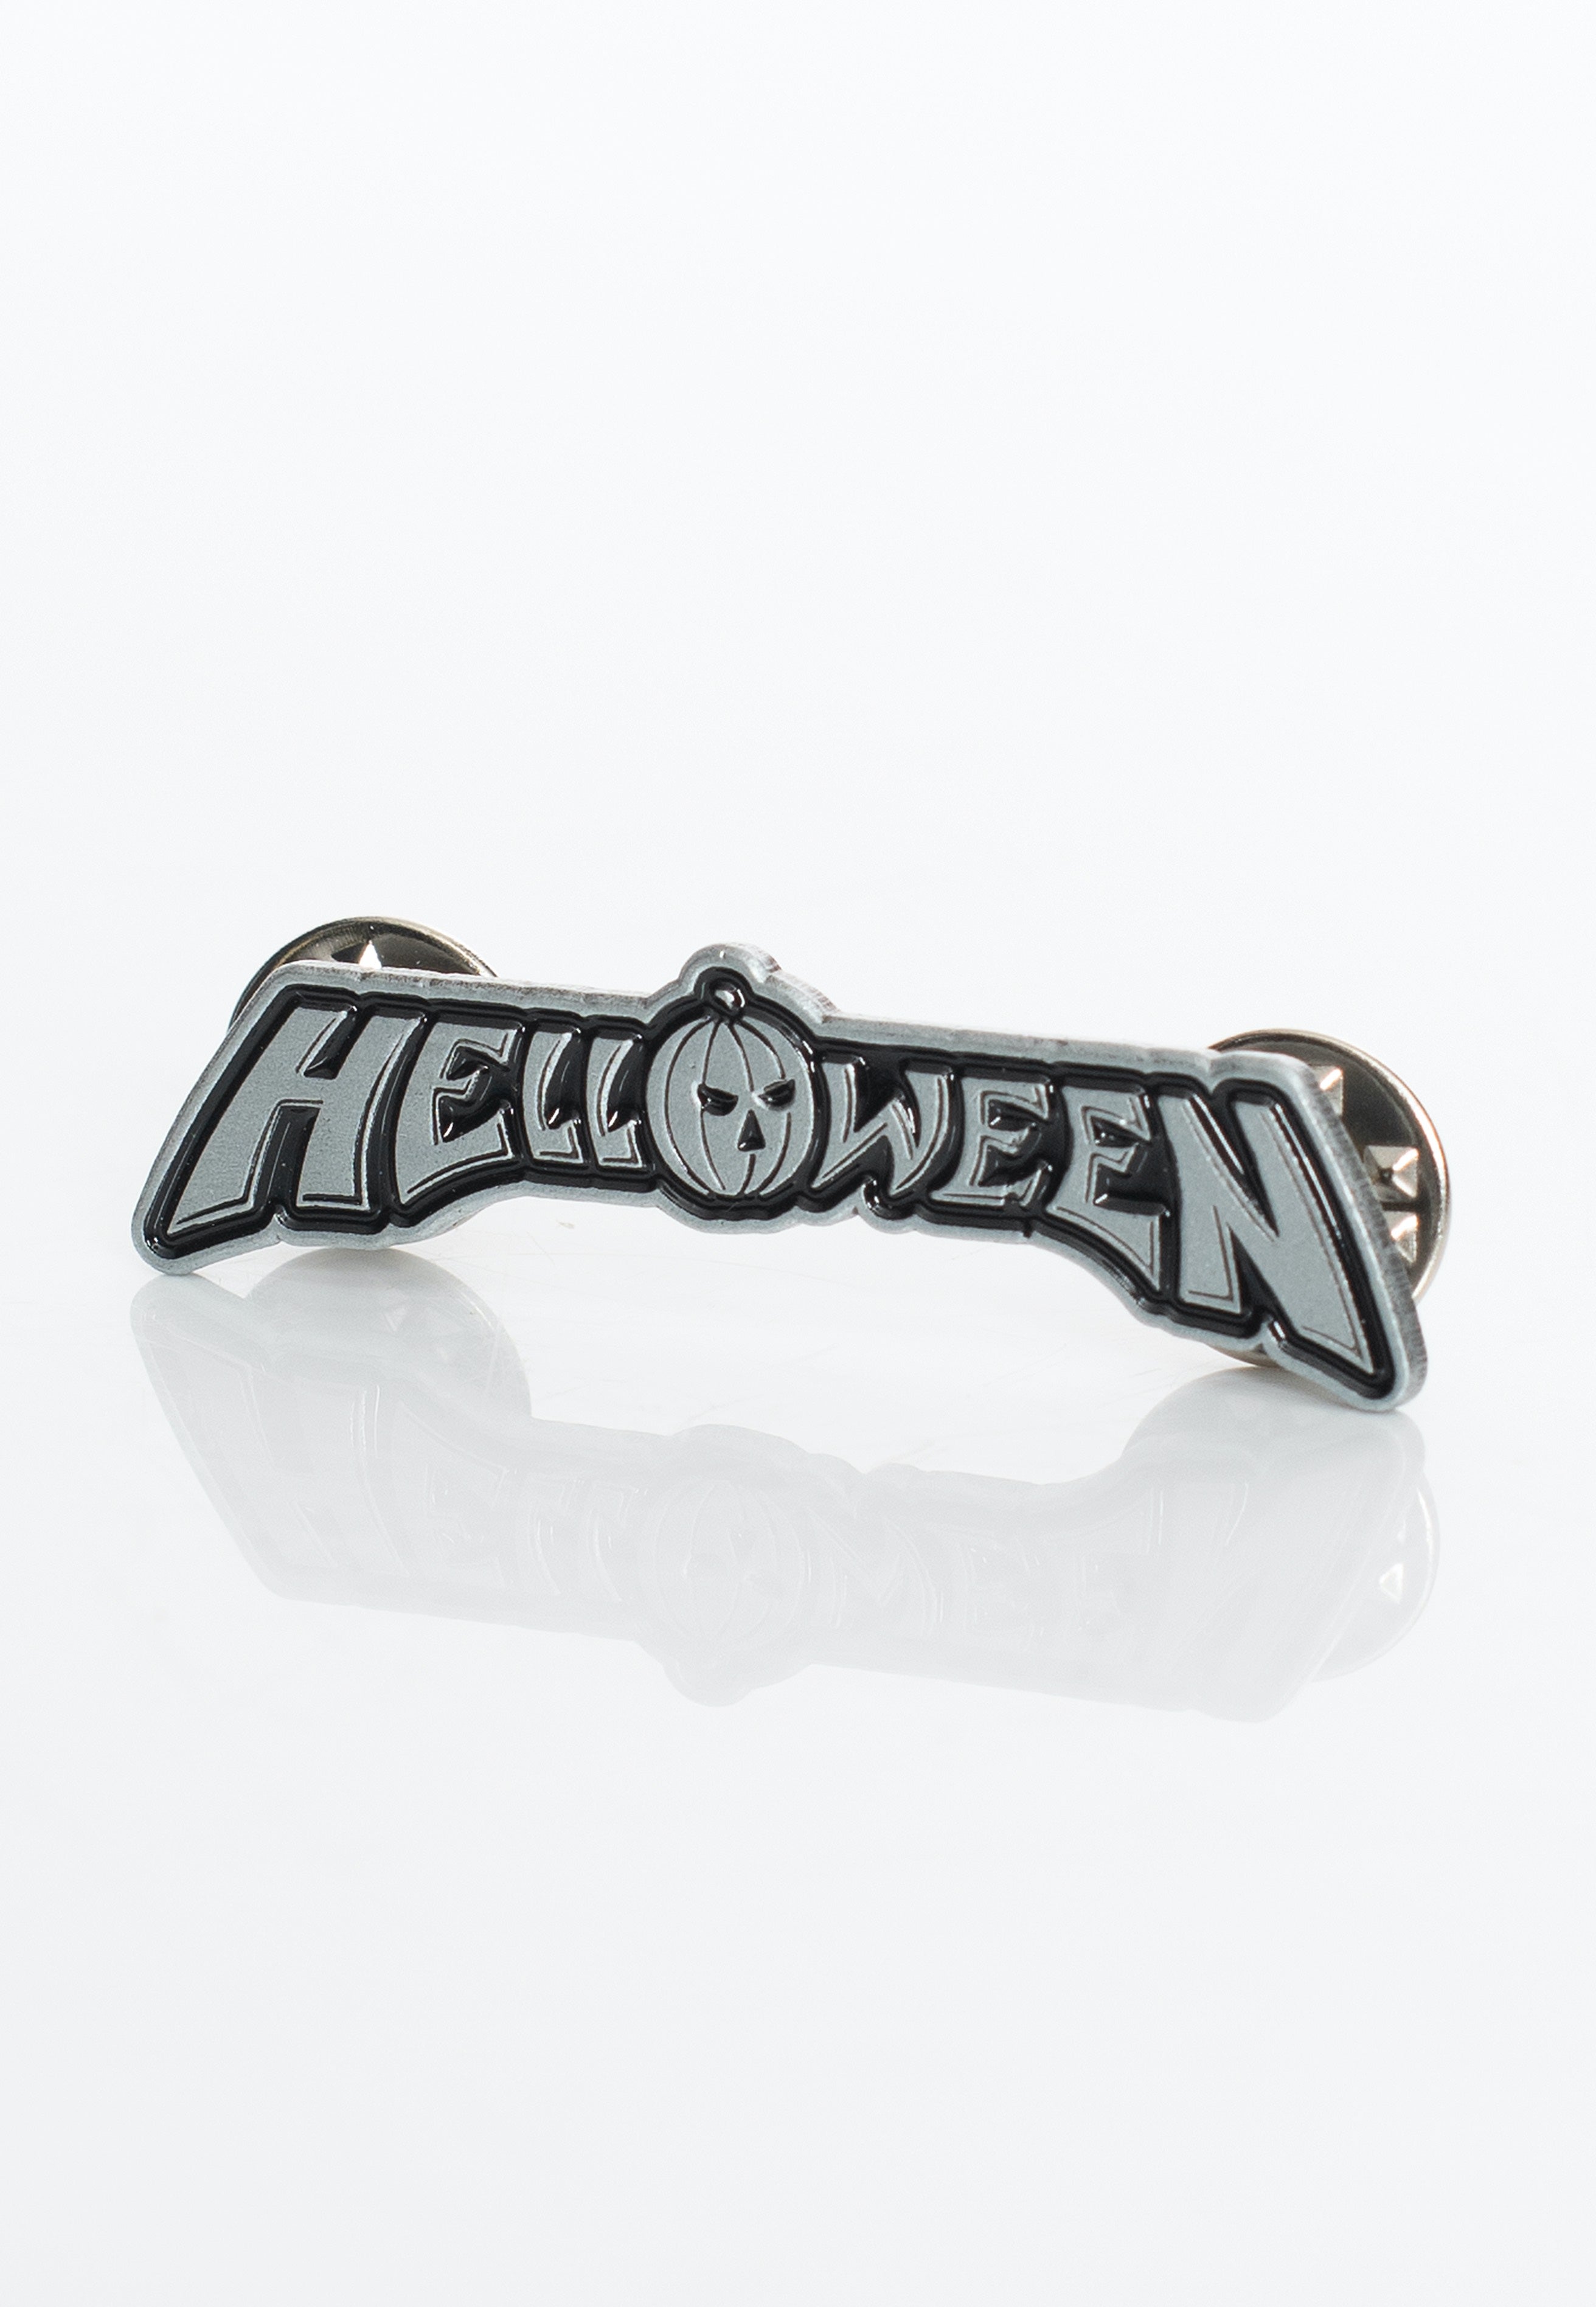 Helloween - Logo - Pin